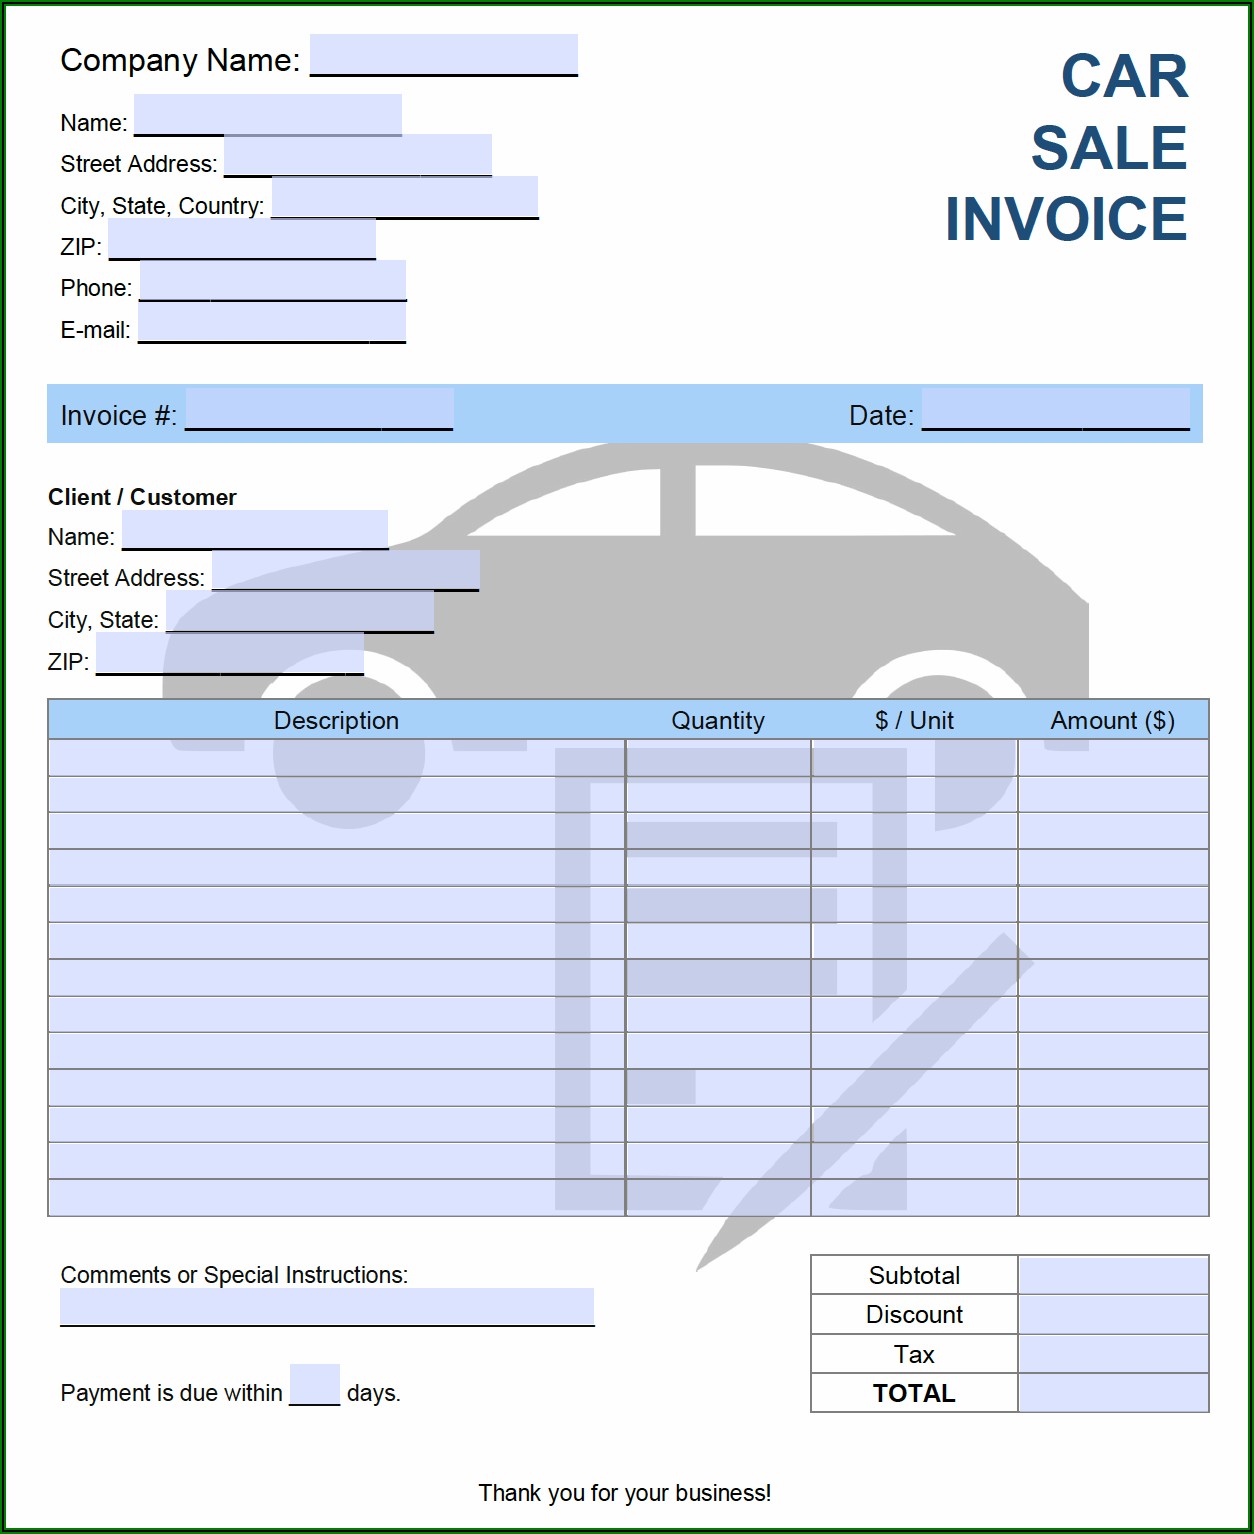 Free Car Sales Invoice Template Uk